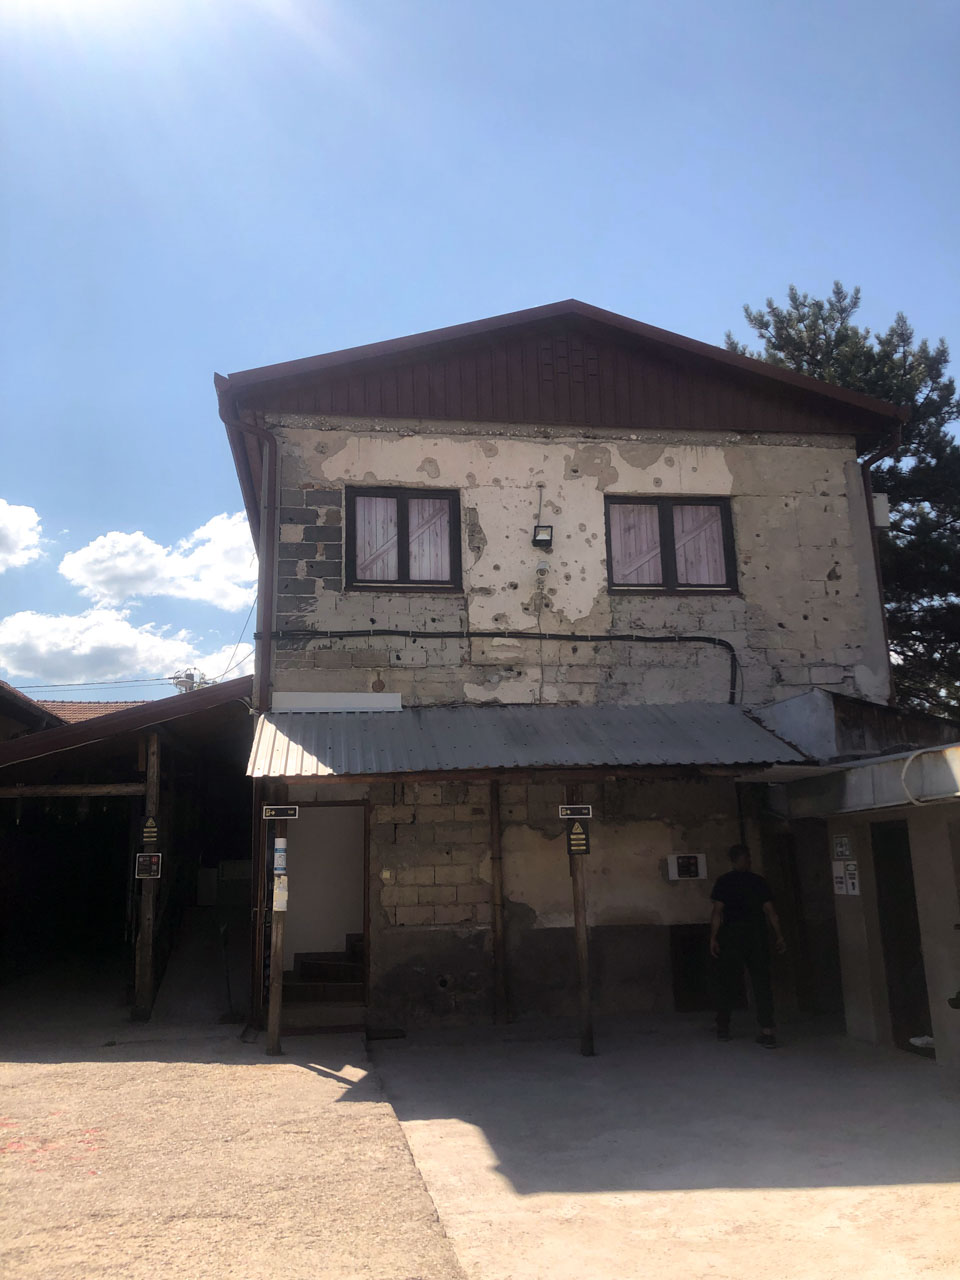 The building belonging to the Kolar Family where the Sarajevo War Tunnel was hidden